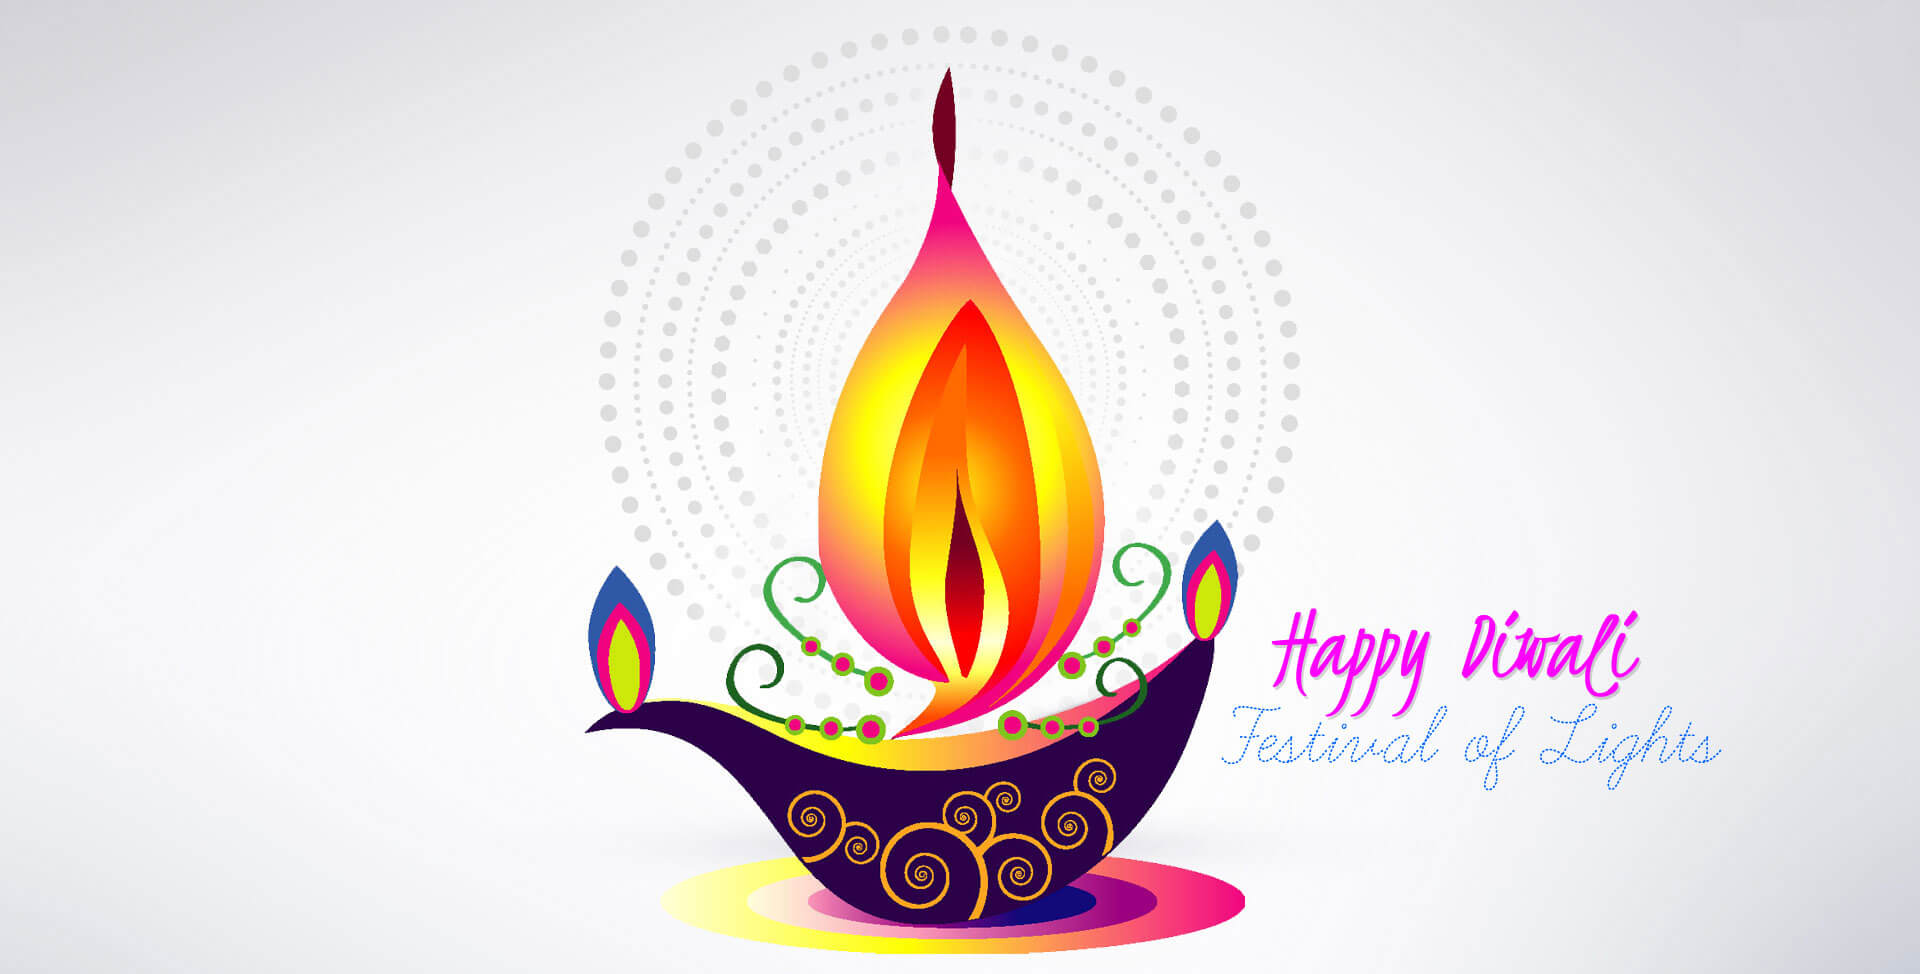 Happy Diwali with diya light greeting card wallpaper image